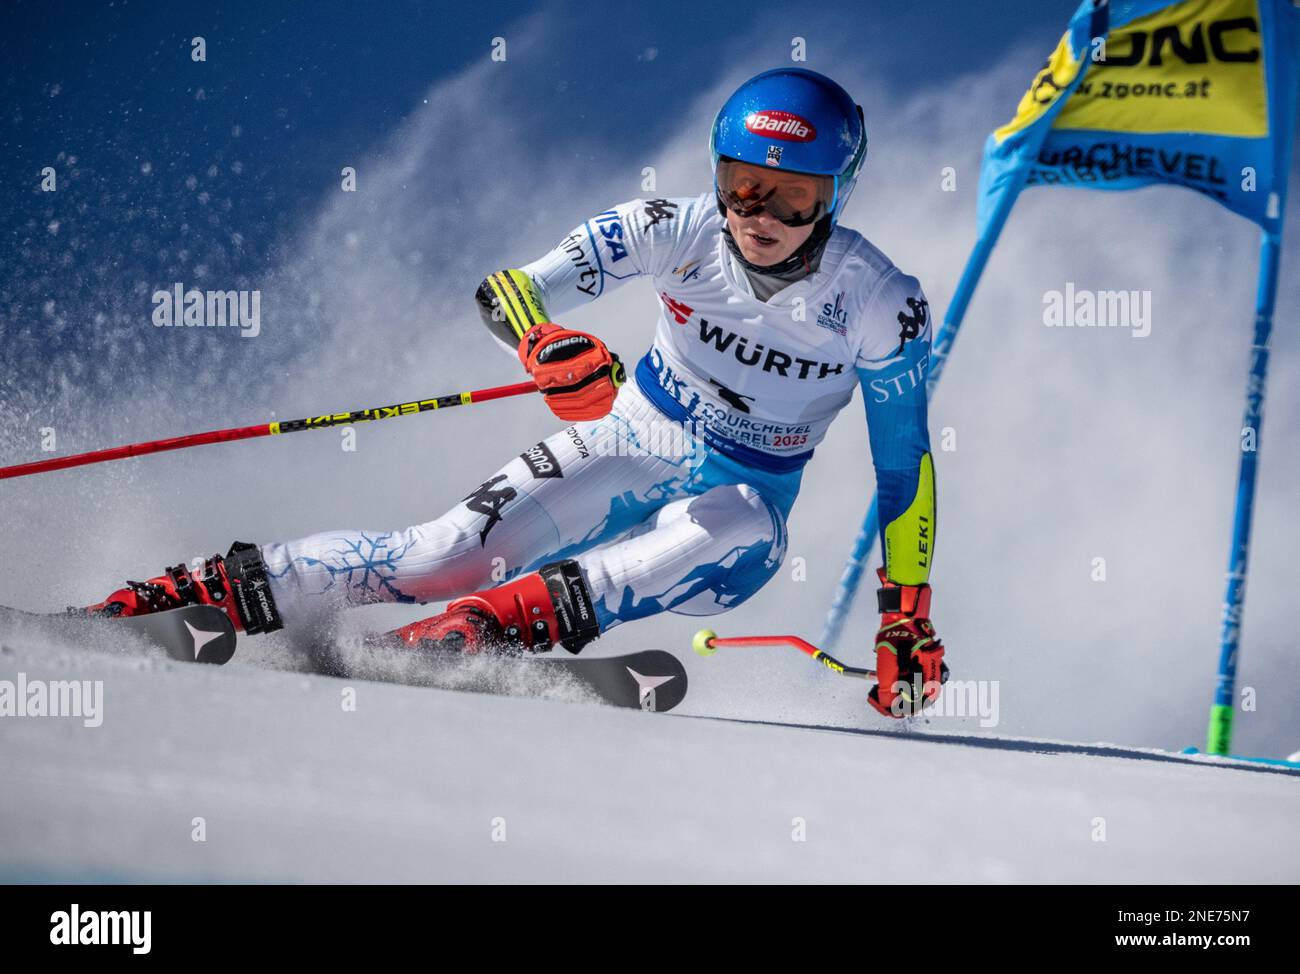 Mikaela shiffrin giant slalom hi-res stock photography and images - Page 5 